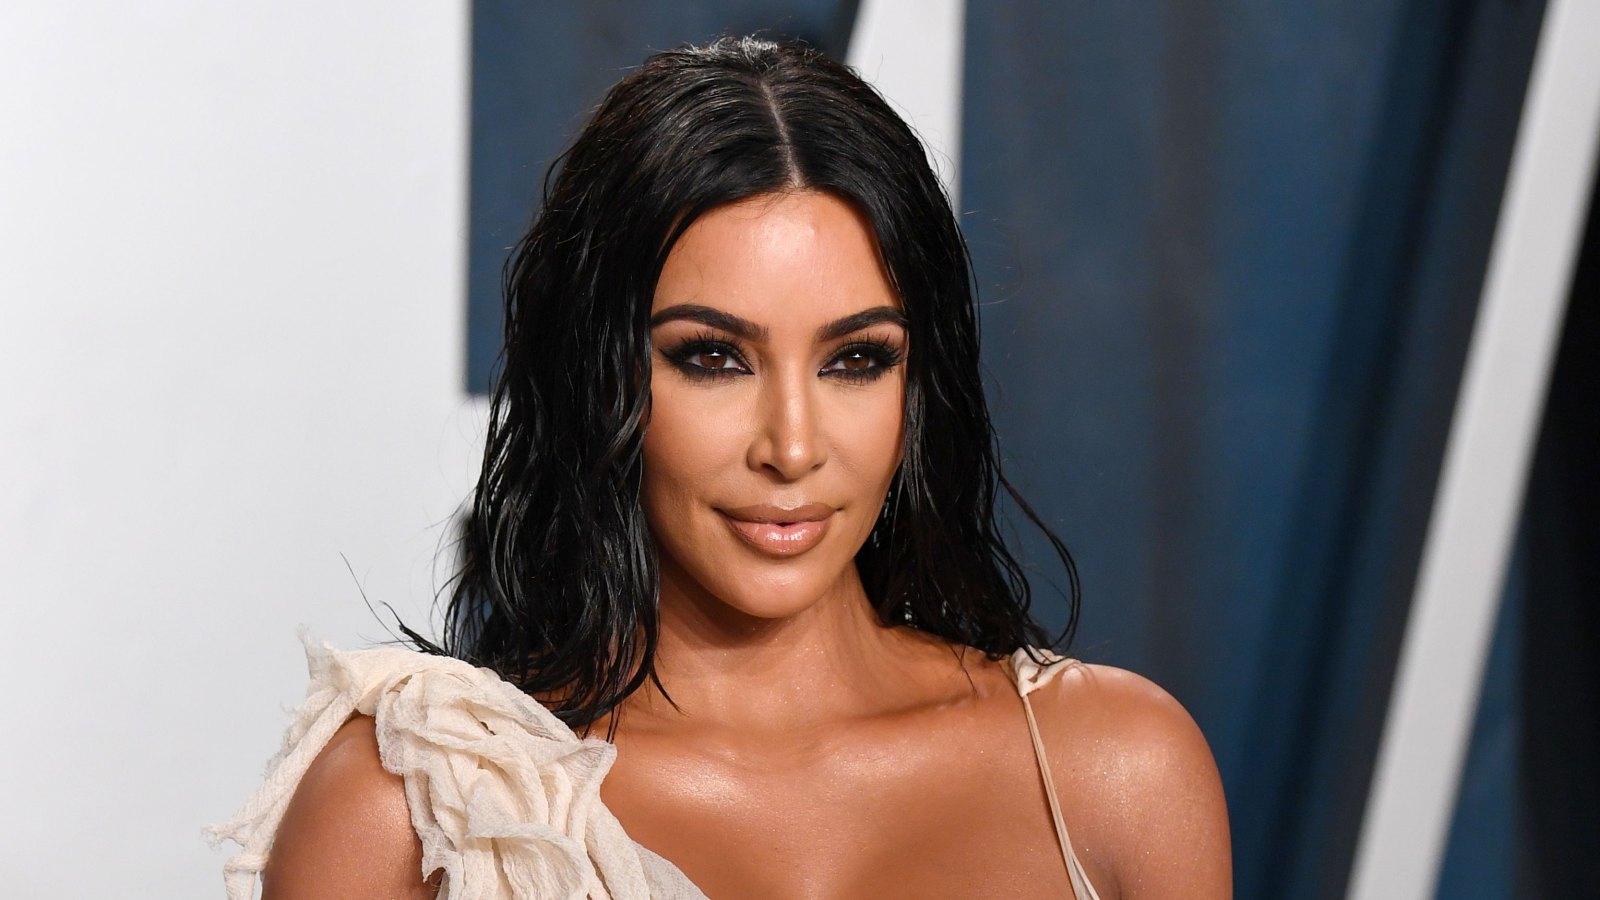 Kim Kardashian West at the 2020 Vanity Fair Oscar Party in Los Angeles.